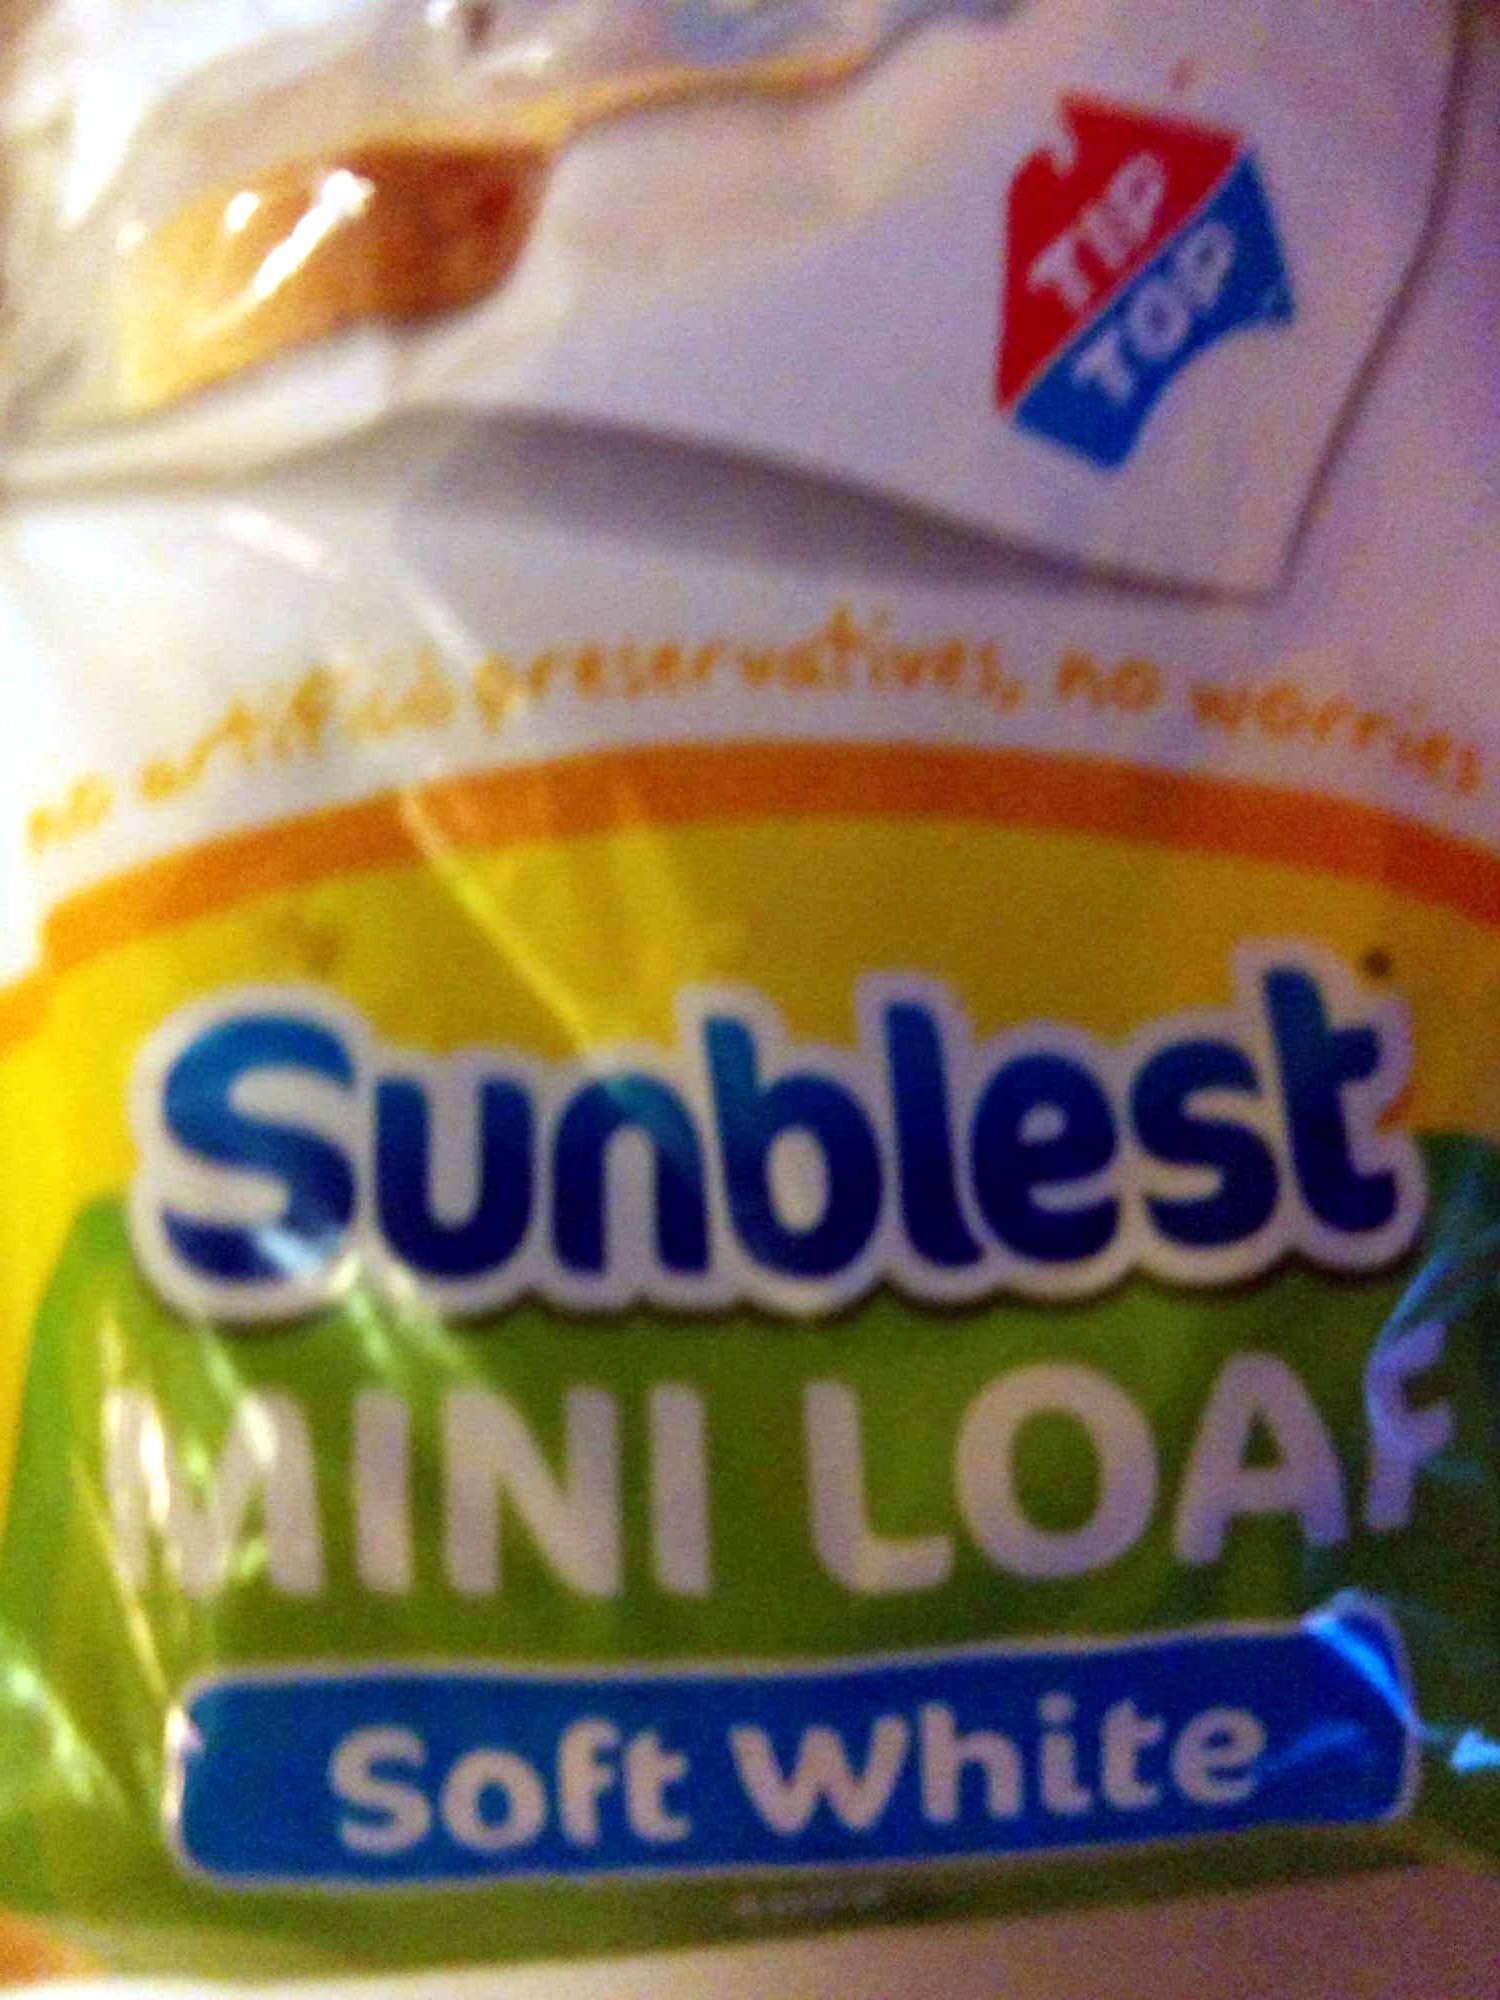 Mini loaf Soft white bread - Product